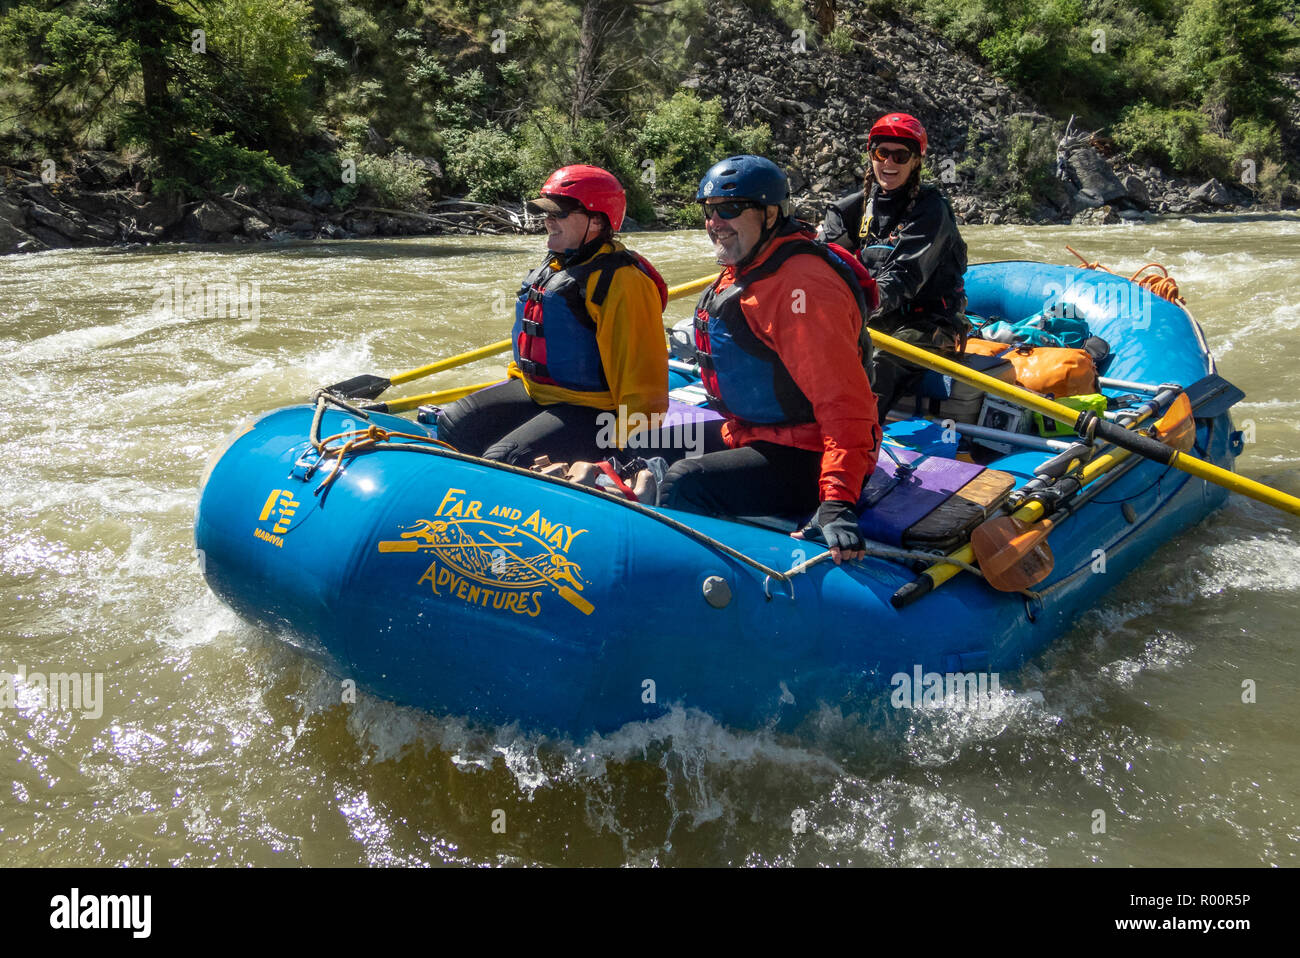 Wildwasser-Rafting auf dem Middle Fork Salmon River in Idaho mit Ausstatter Far and Away Adventures. Stockfoto